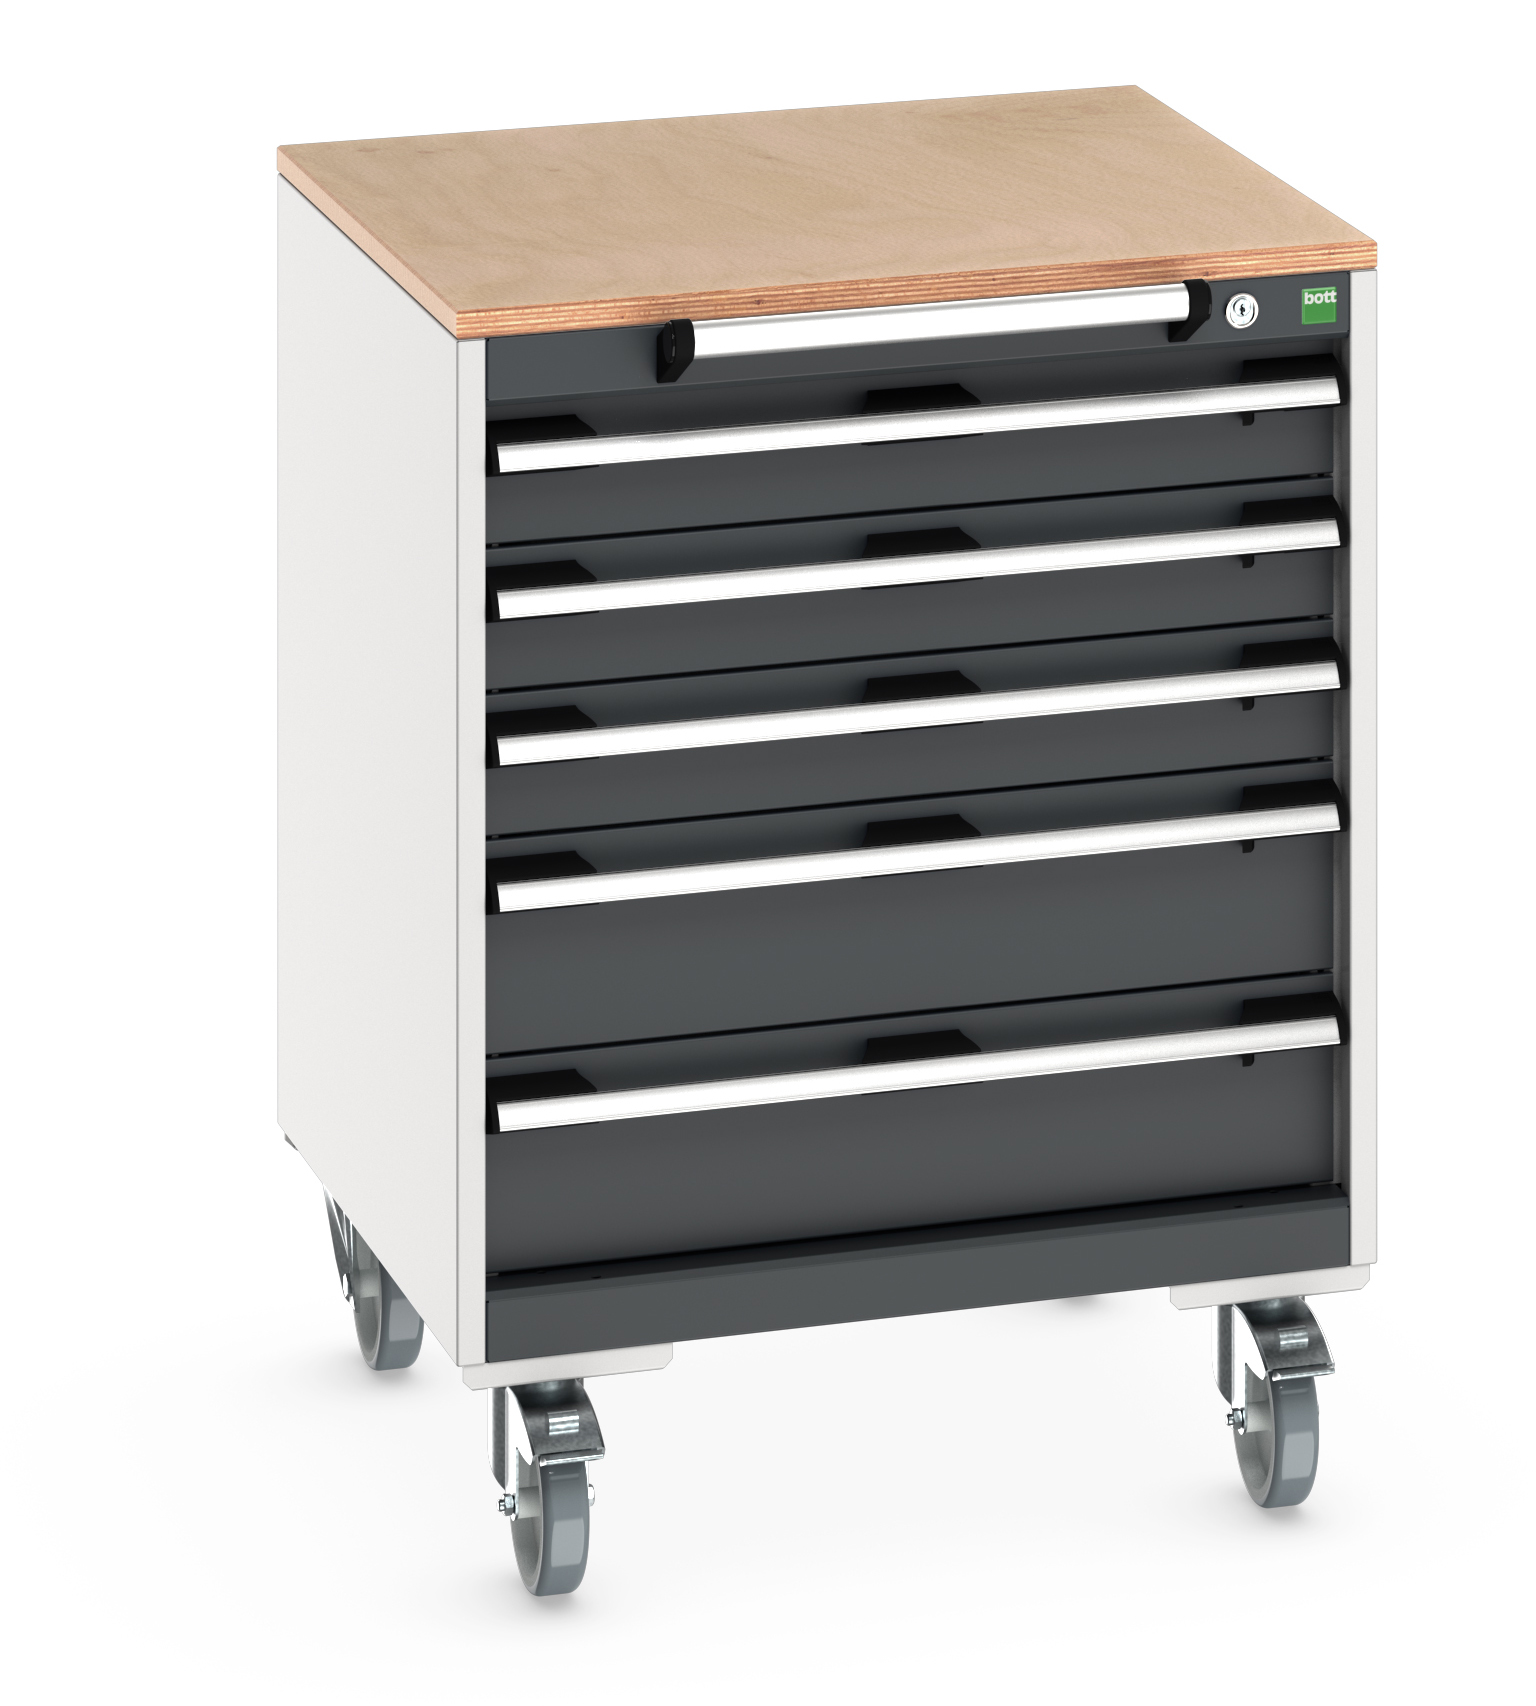 Bott Cubio Mobile Drawer Cabinet With 5 Drawers & Multiplex Worktop - 40402147.19V